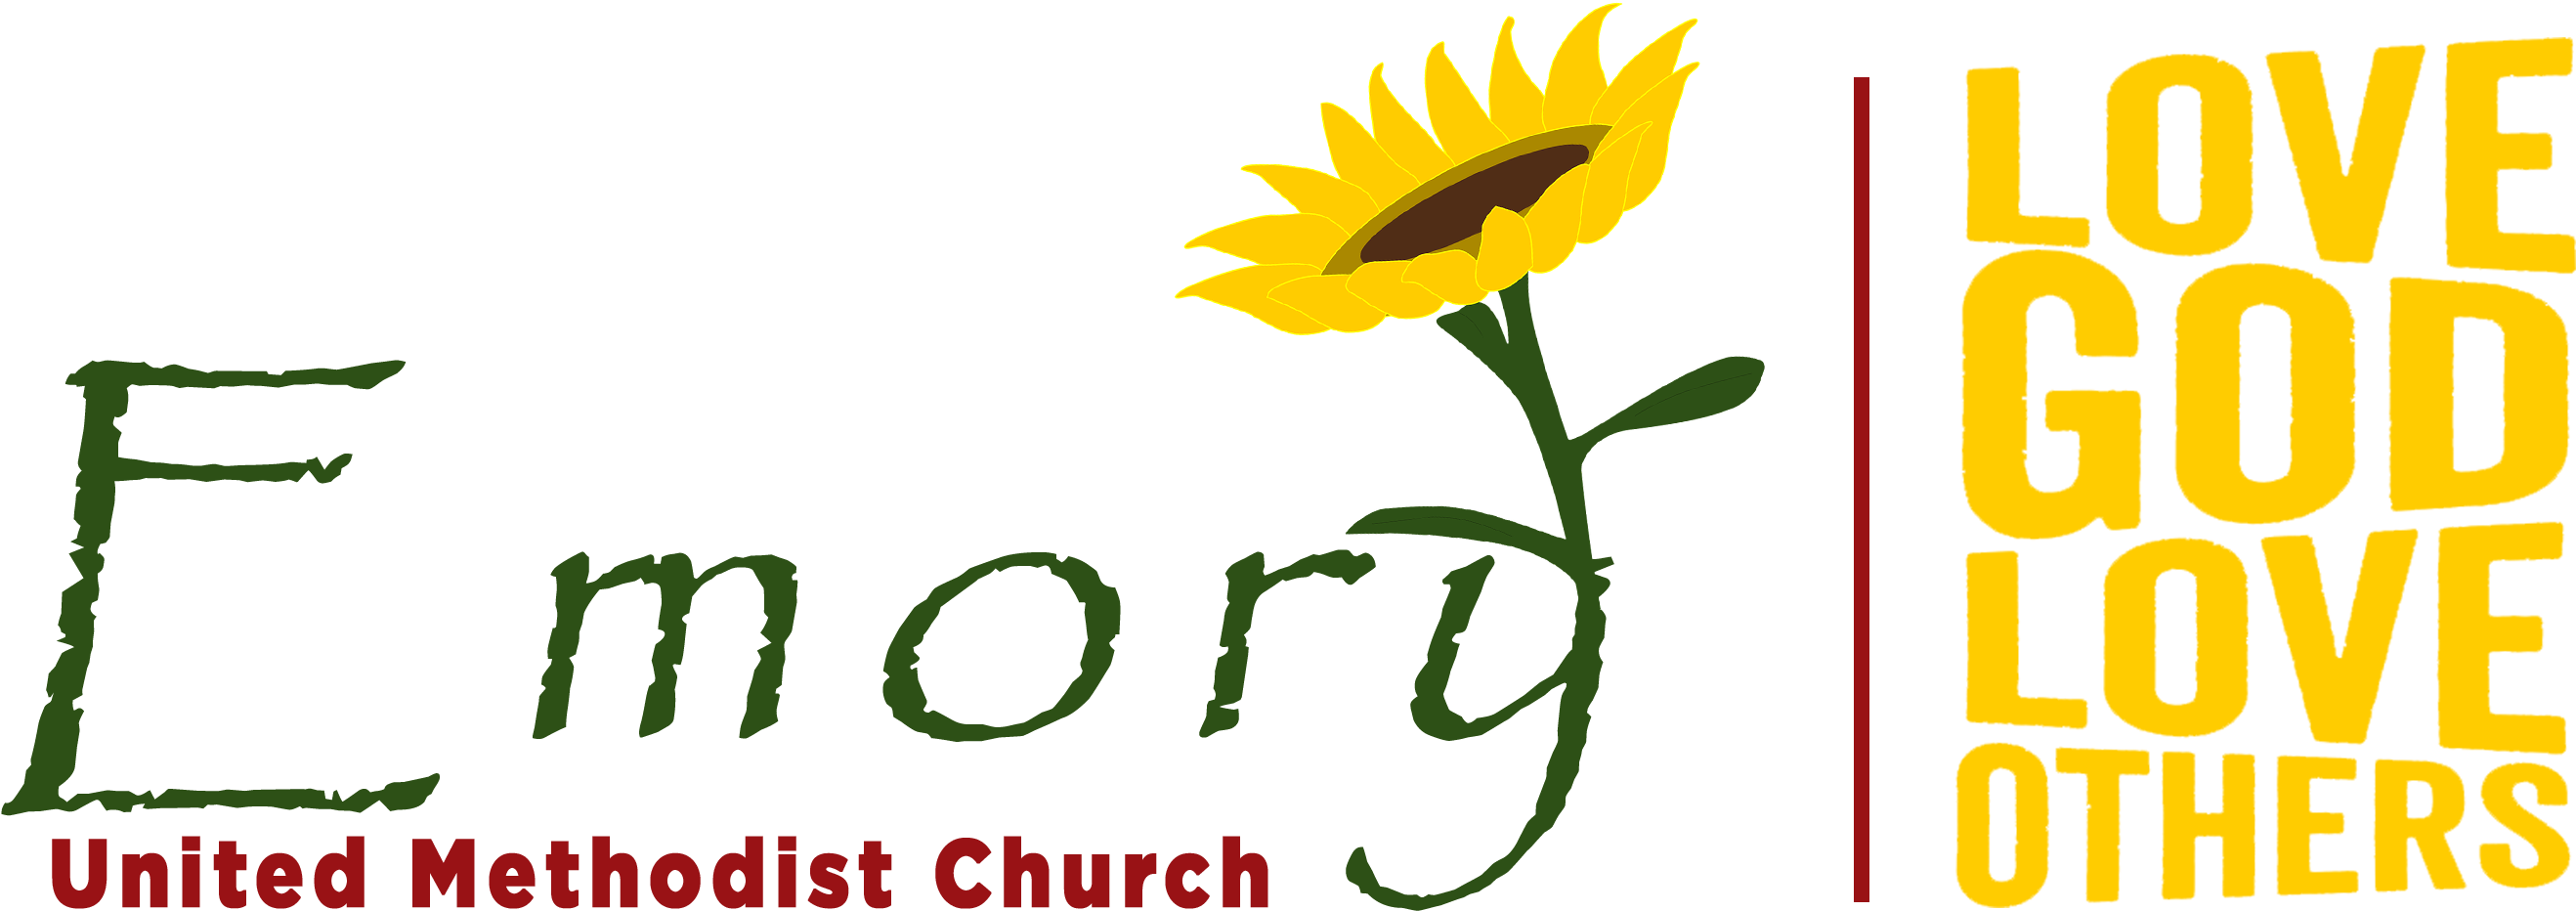 Emory United Methodist Church - Emory United Methodist Church (2762x985)